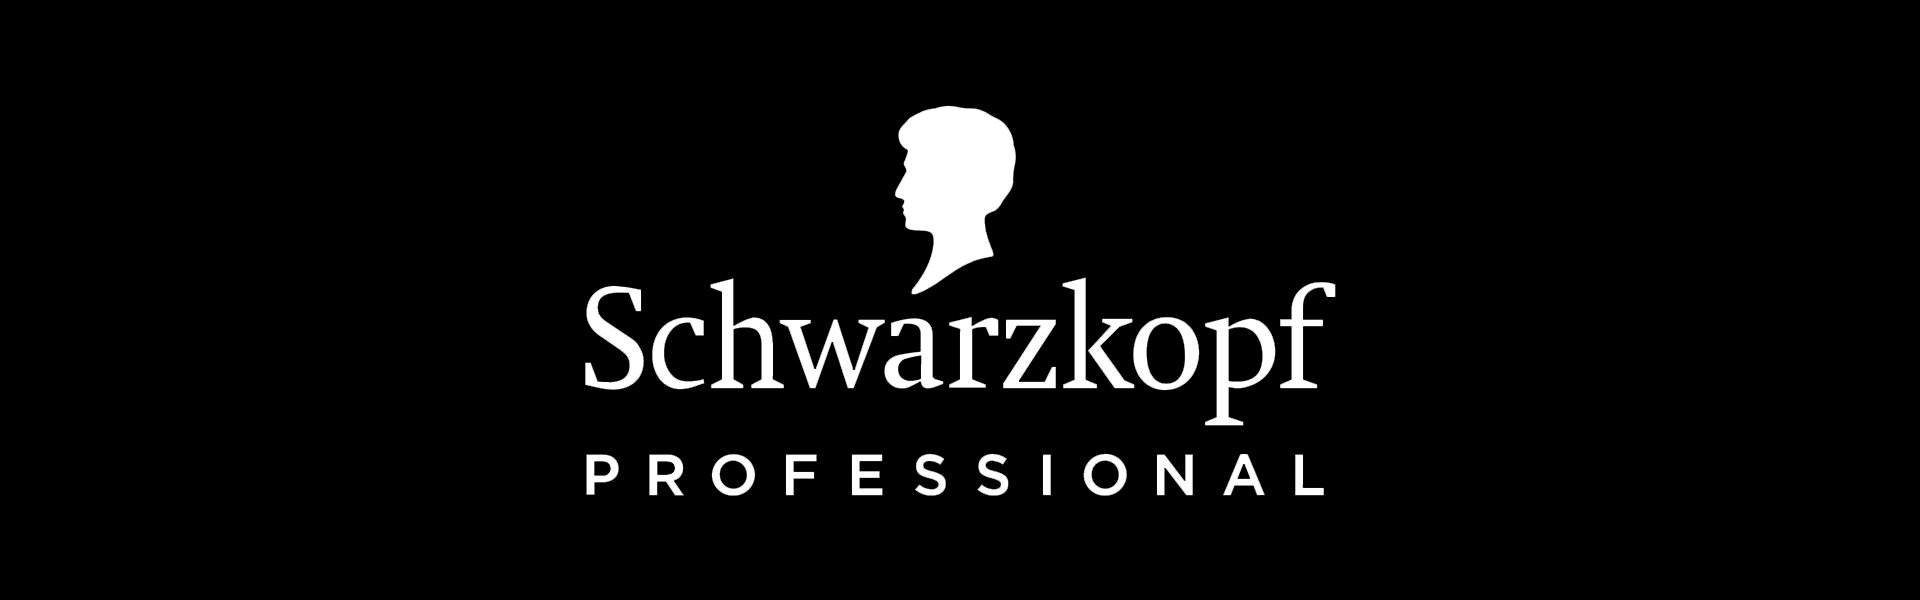 Schwarzkopf Professional Silhouette спрей для волос 750 мл Schwarzkopf Professional